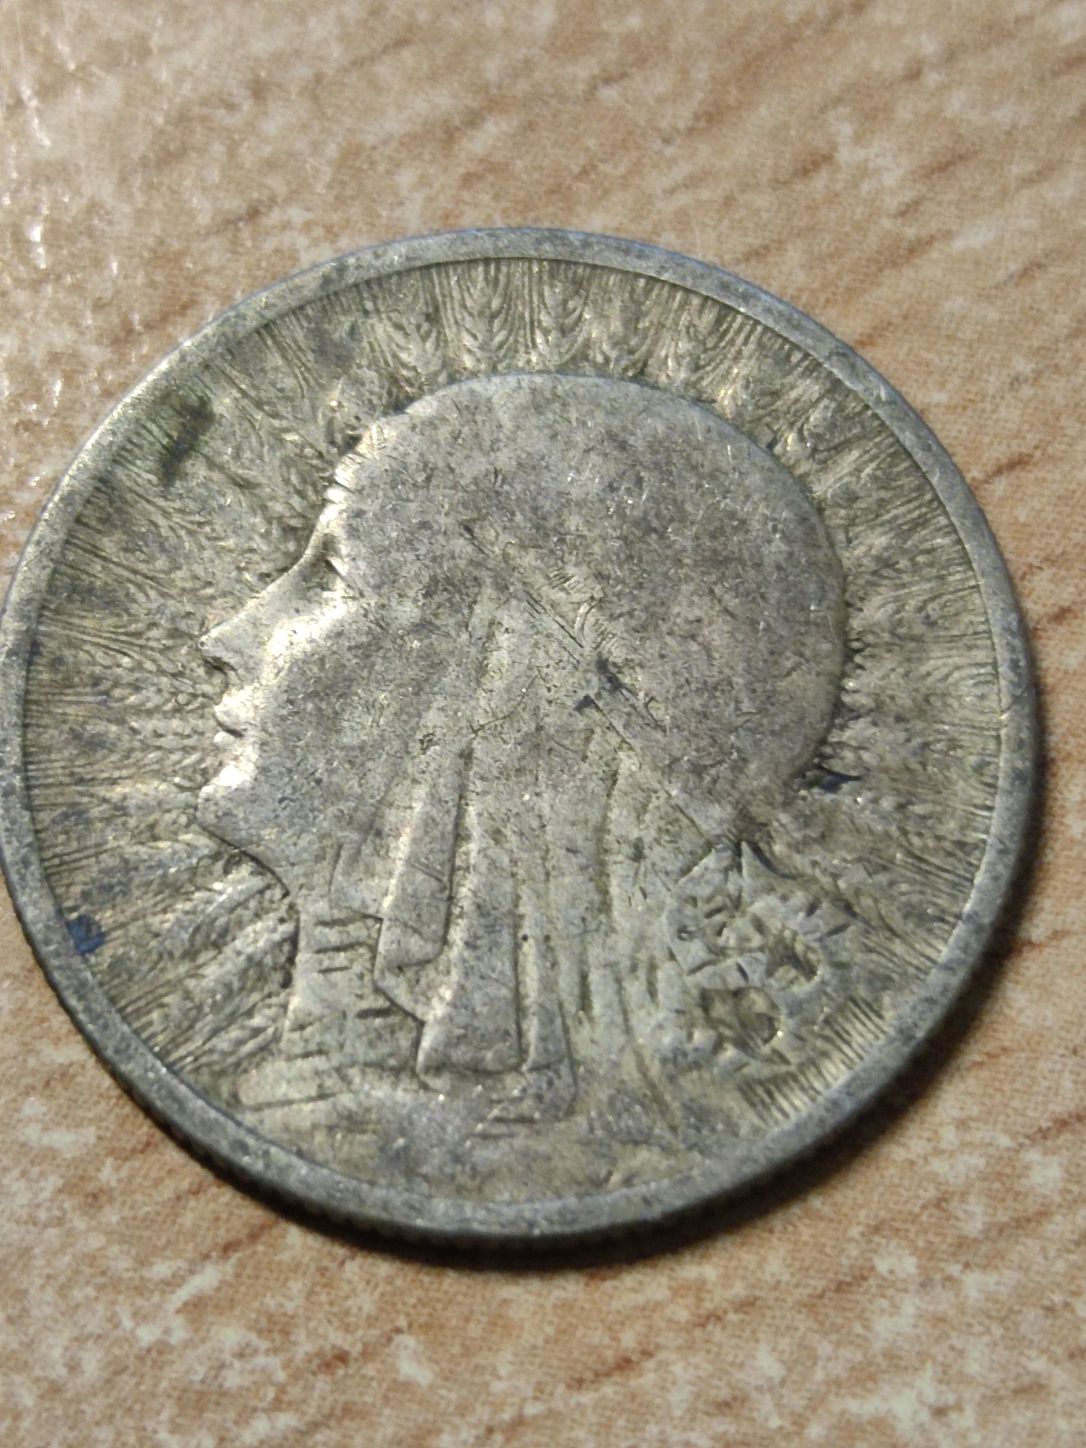 Moneta 2 zł z 1932 roku